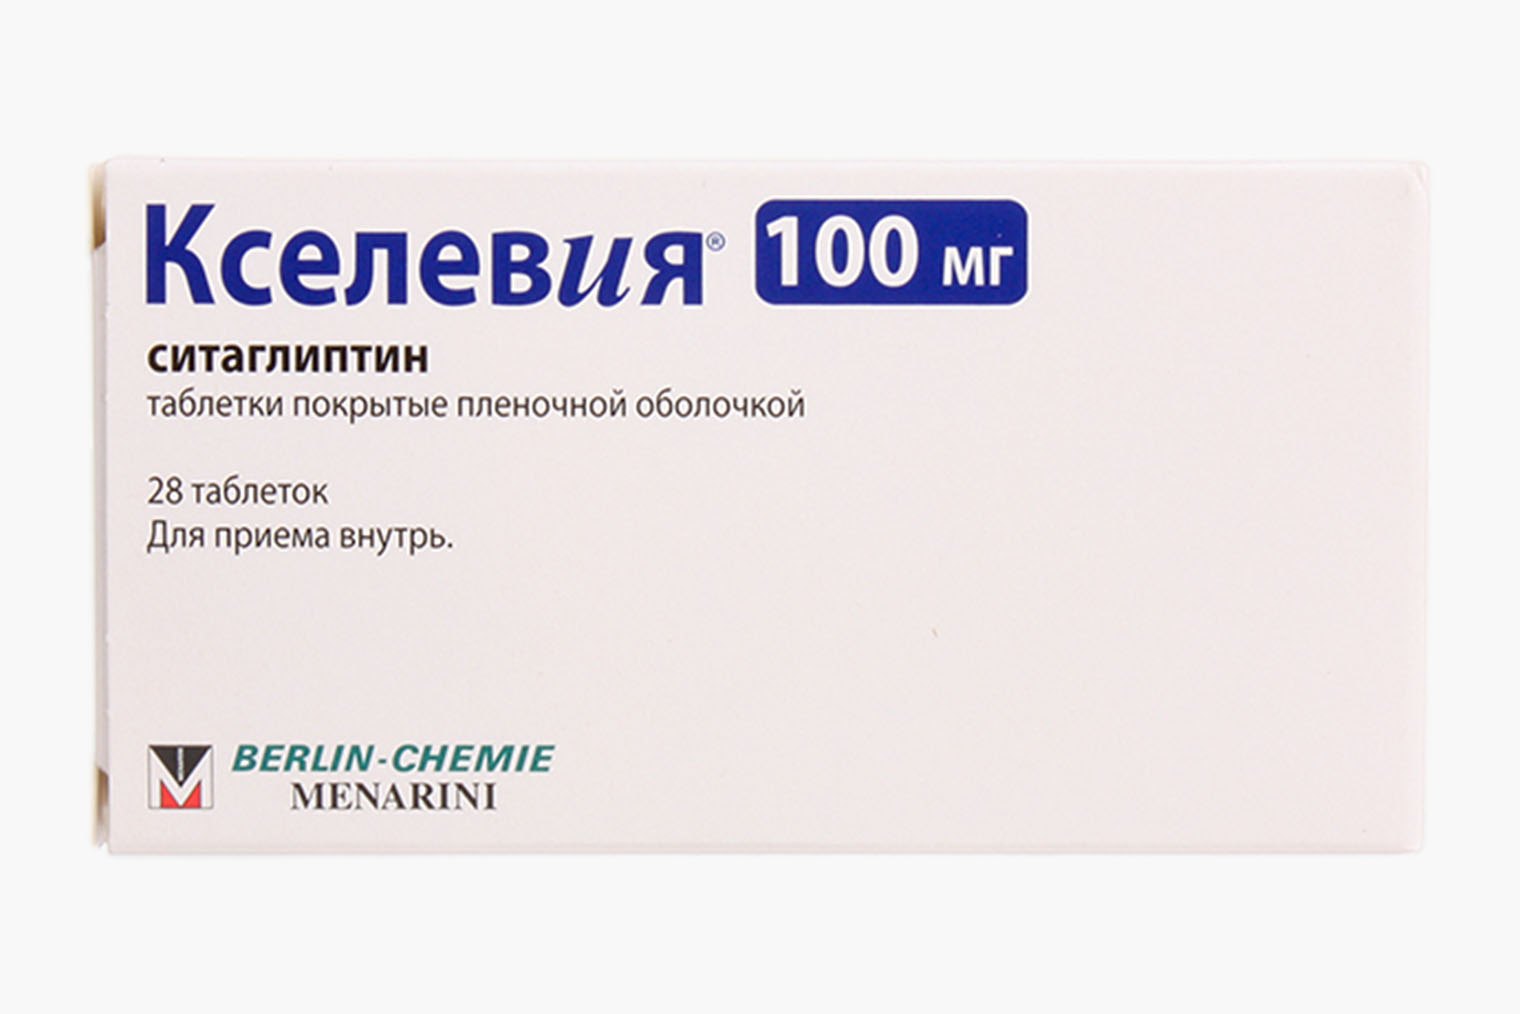 Немецкий препарат с ситаглиптином. Источник: eapteka.ru